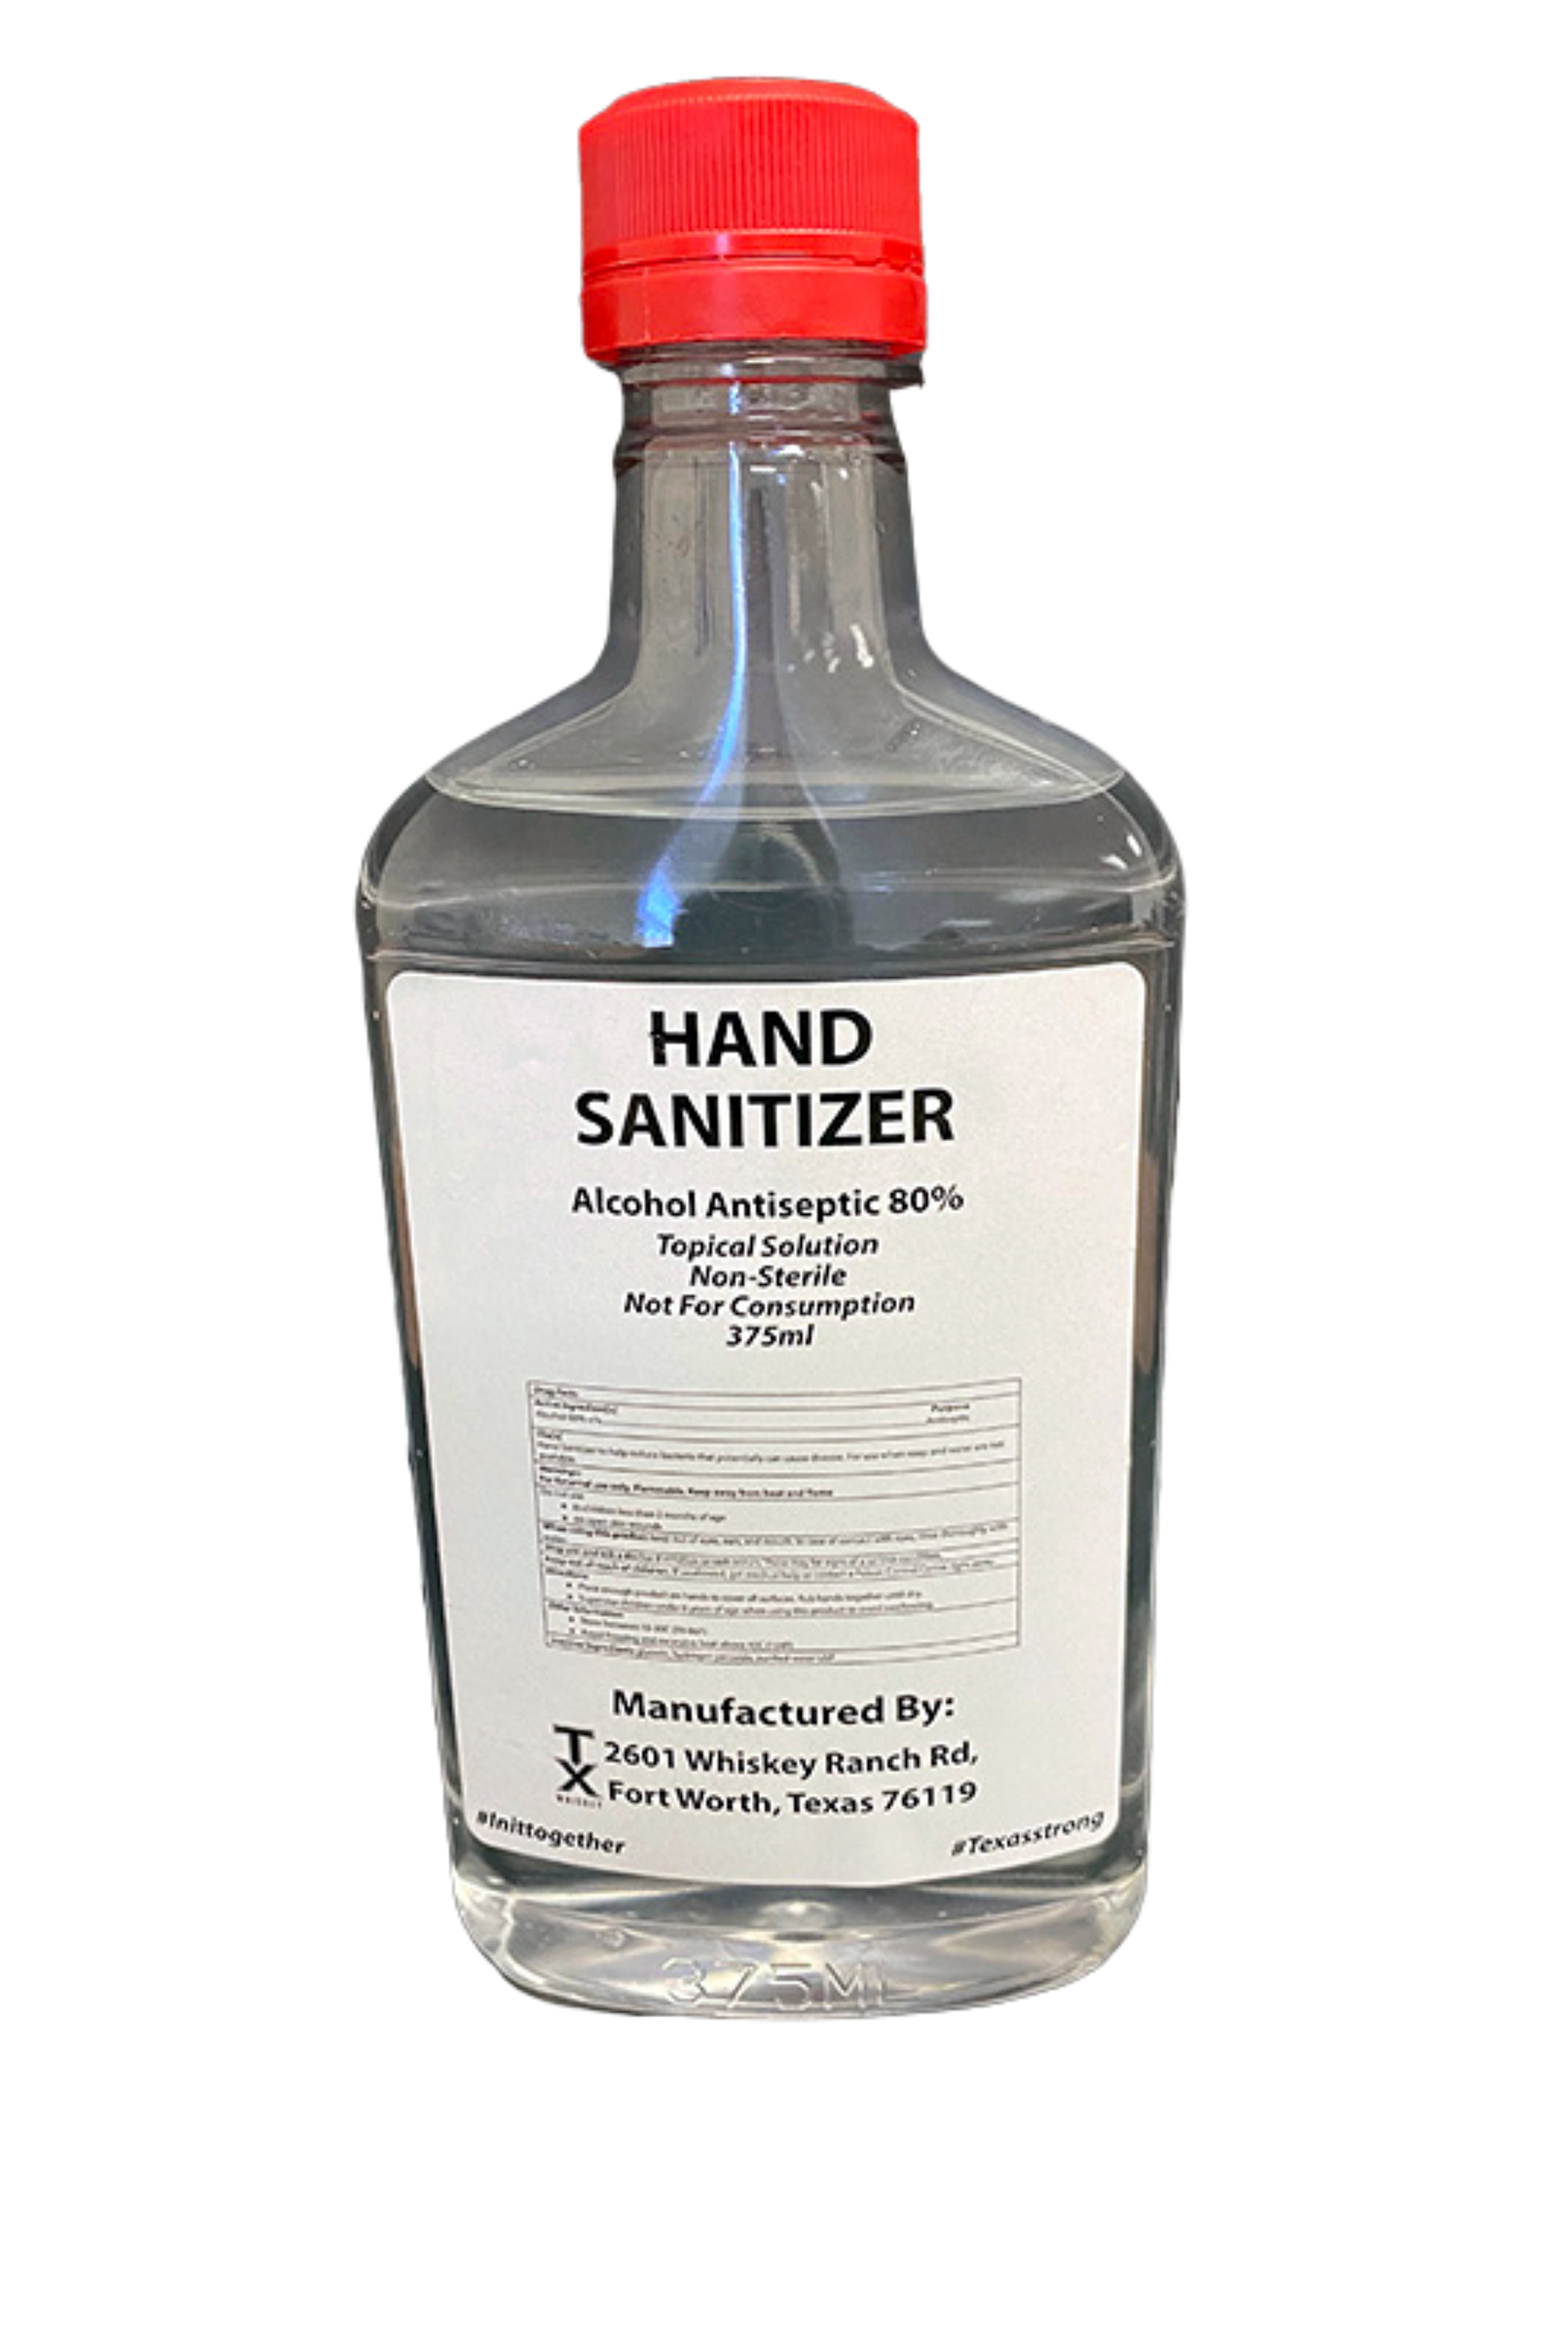 Texas-hand-sanitizer-whiskey-bottle-label